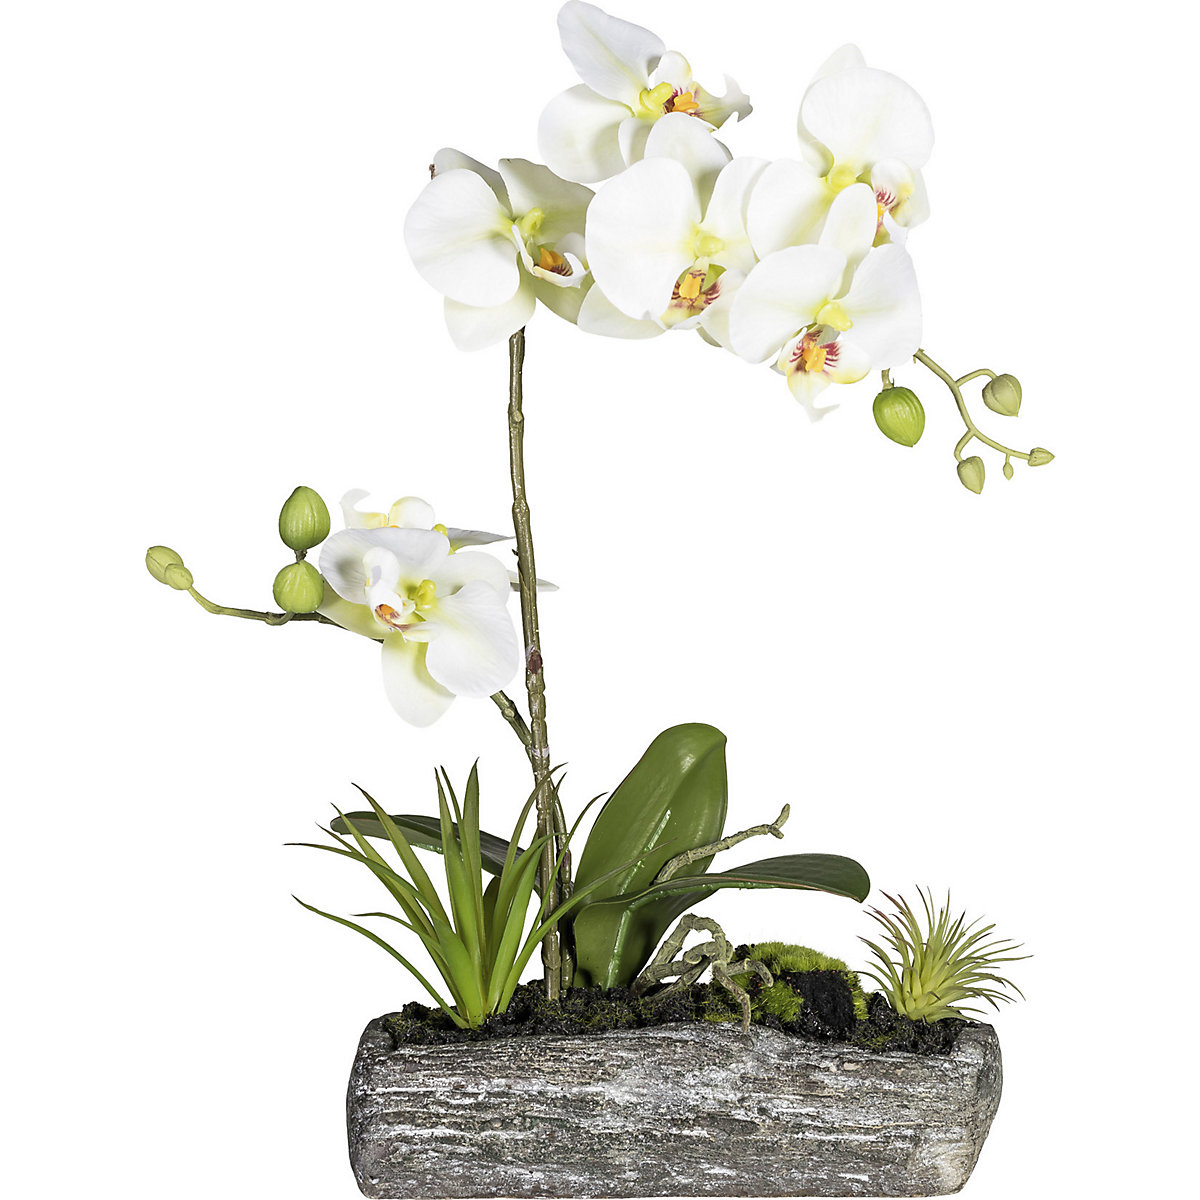 Aranžma orhideje Phalaenopsis v posodi iz polyresina